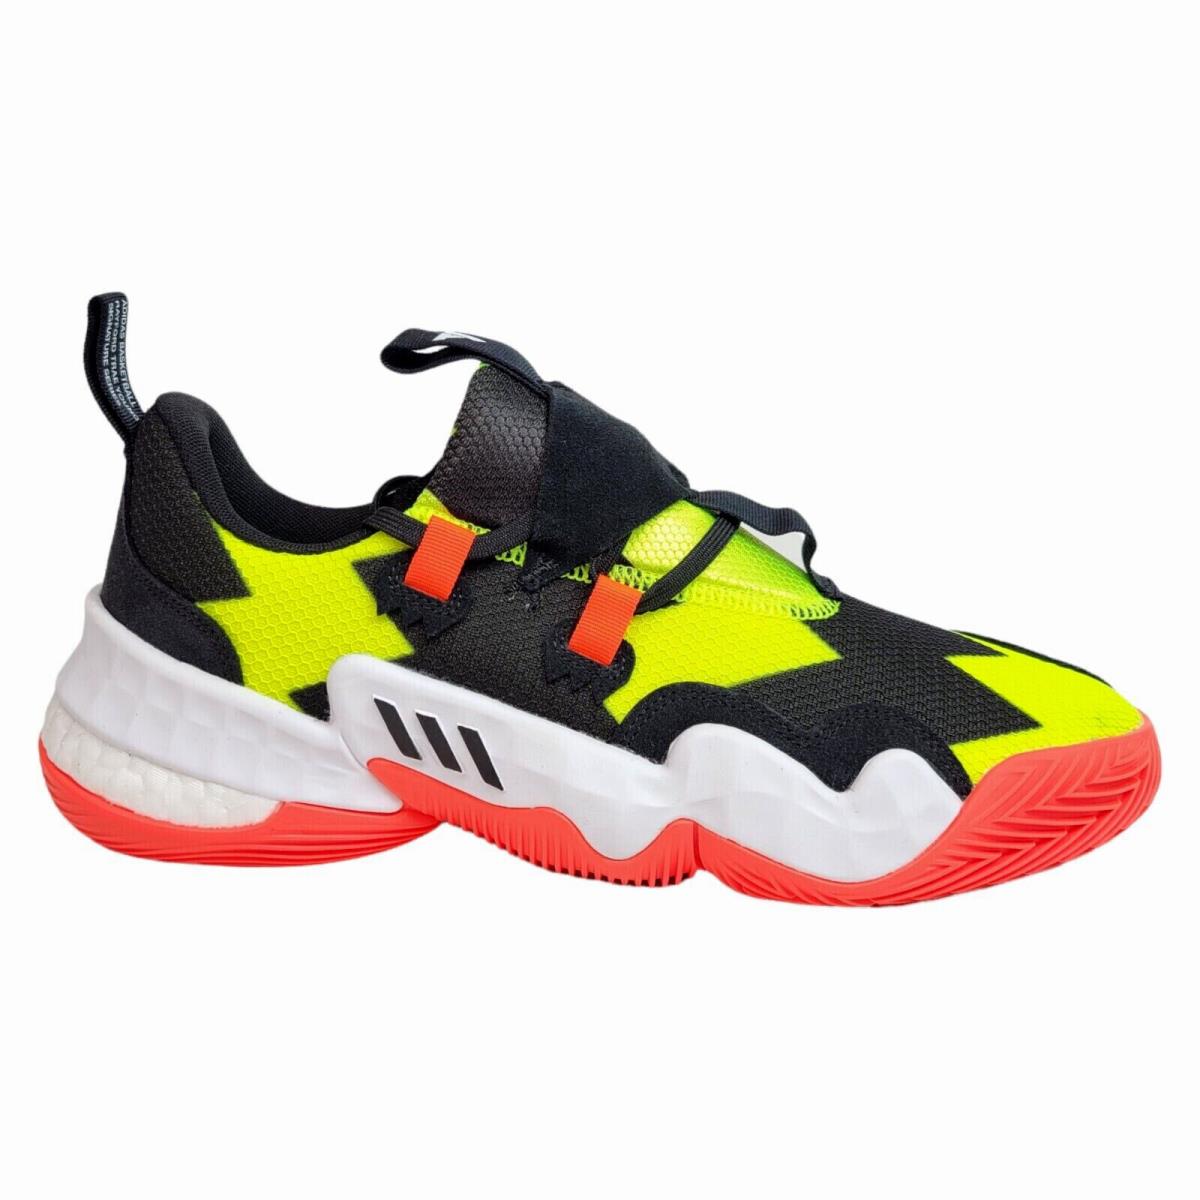 Adidas Mens 11.5 Trae Young 1 So So Def Recordings Atlanta Shoes Sneakers H69000